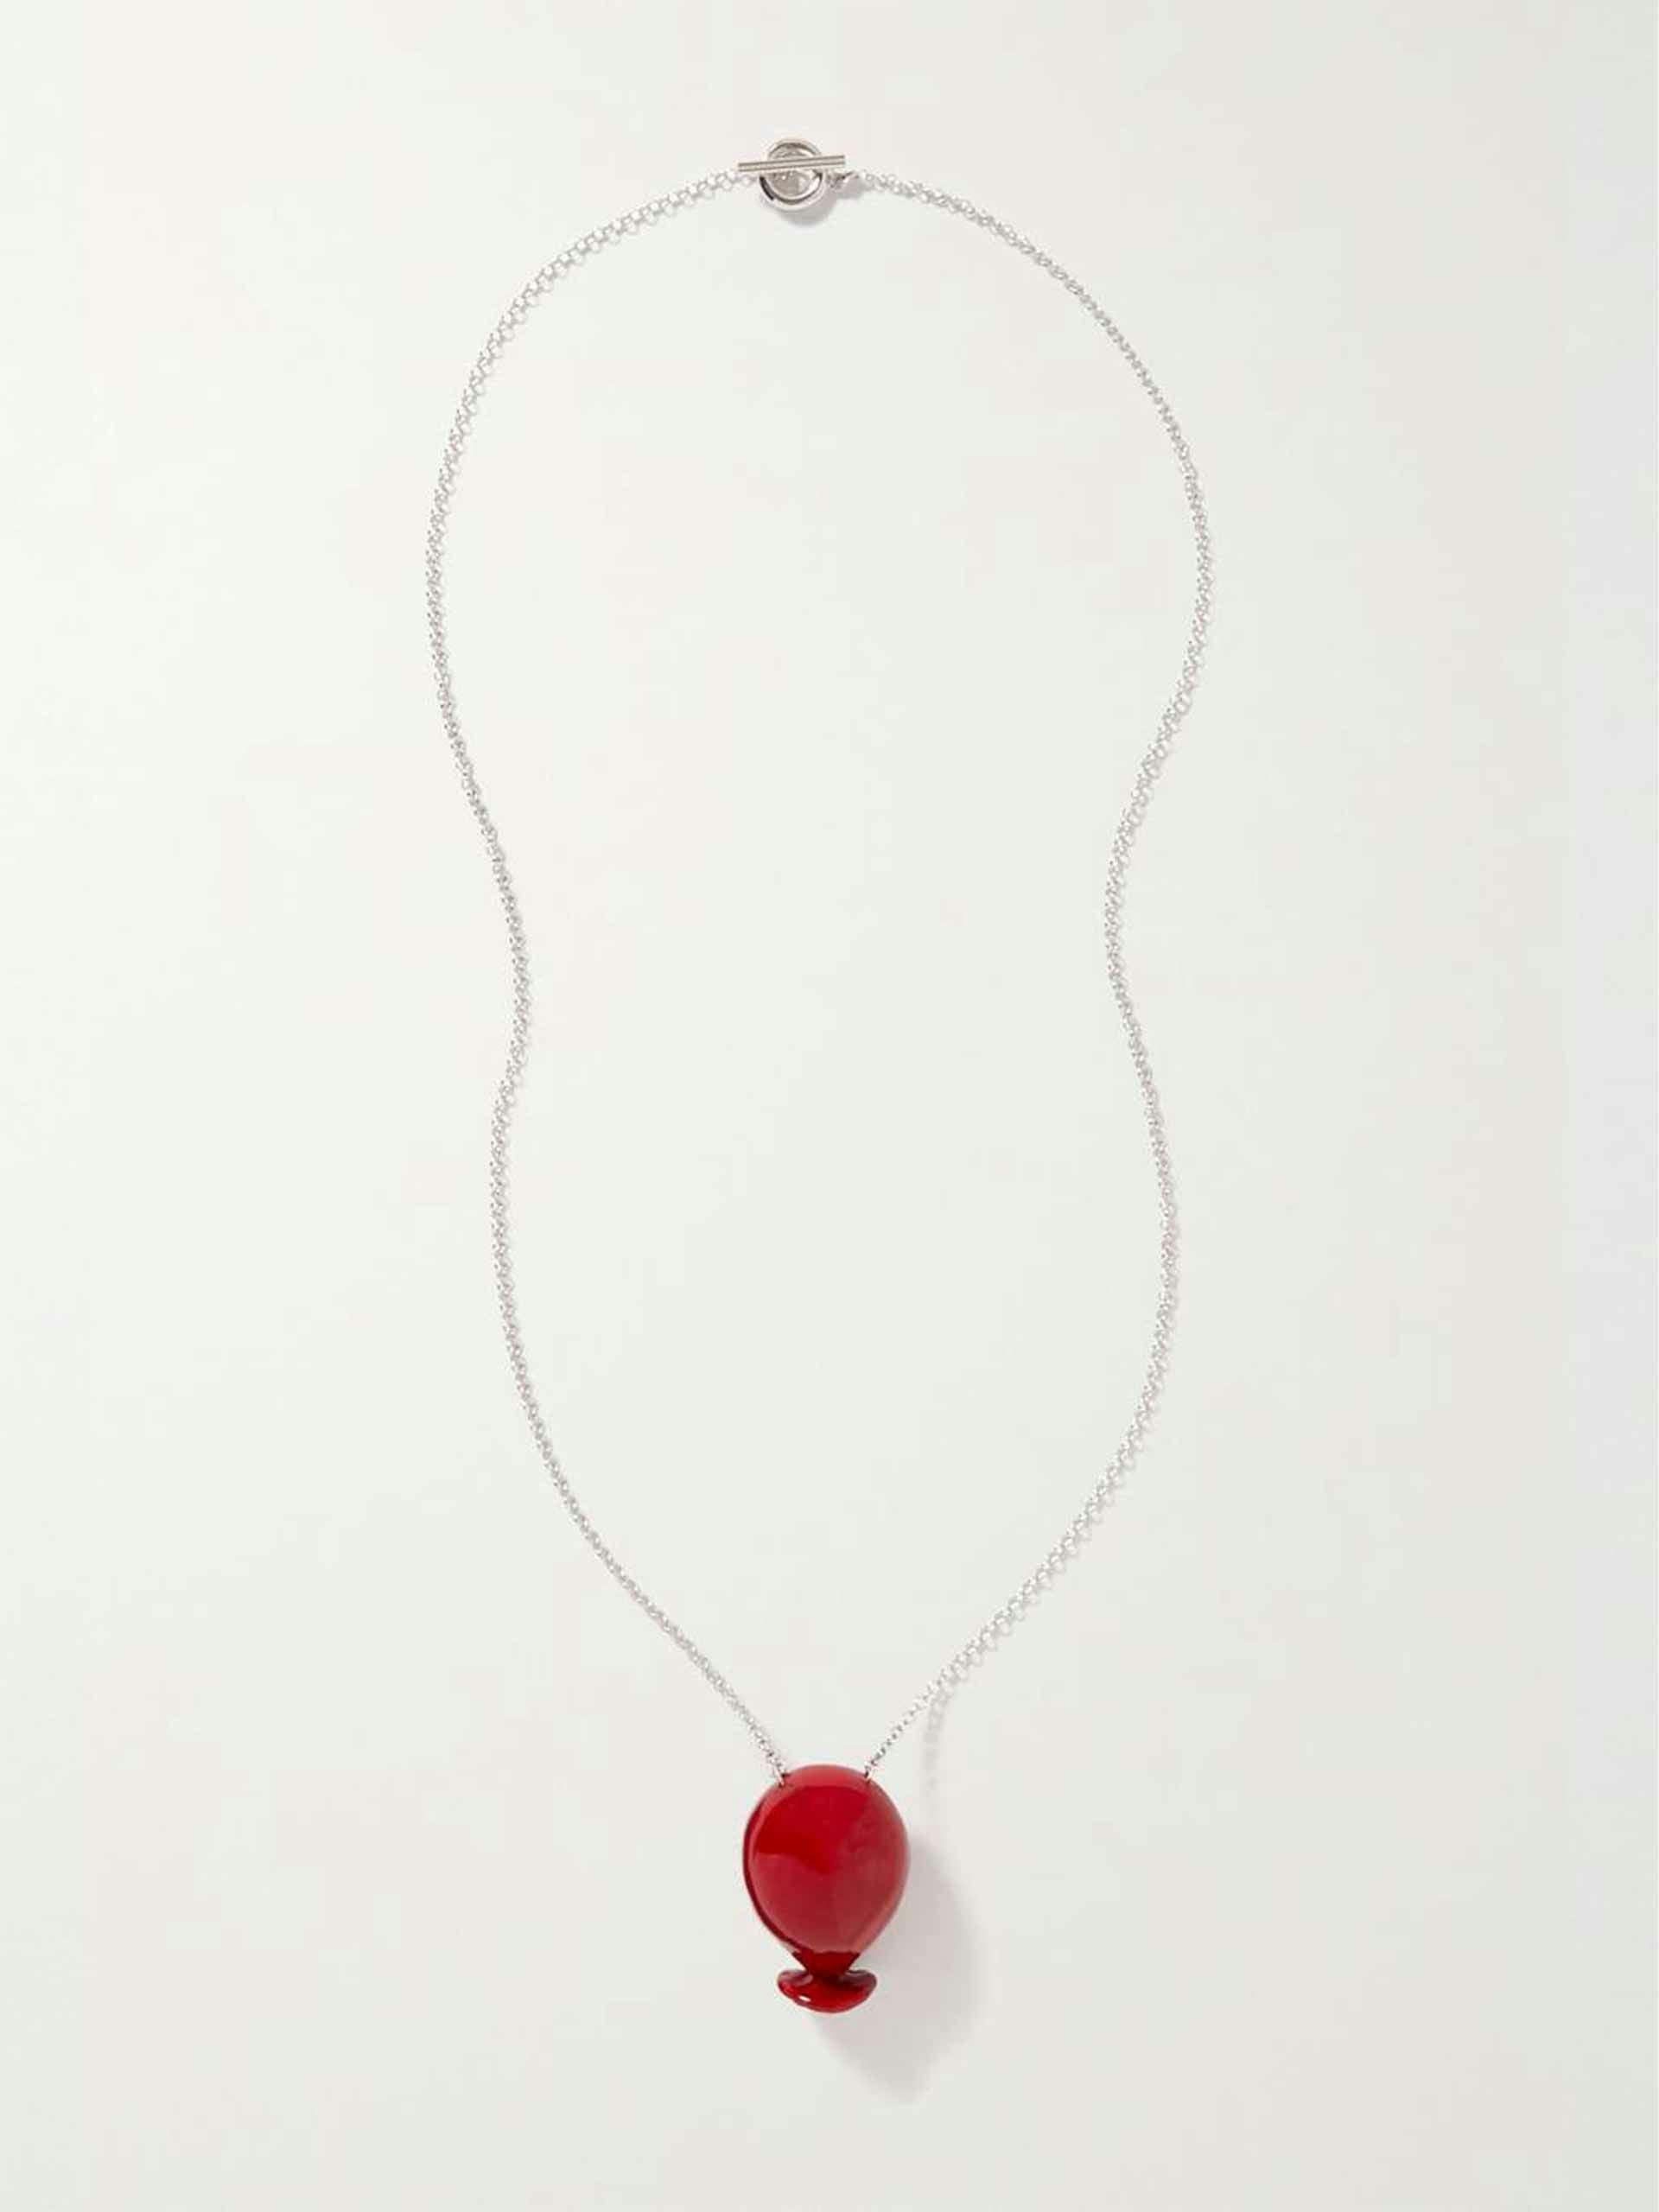 Balloon silver and enamel necklace